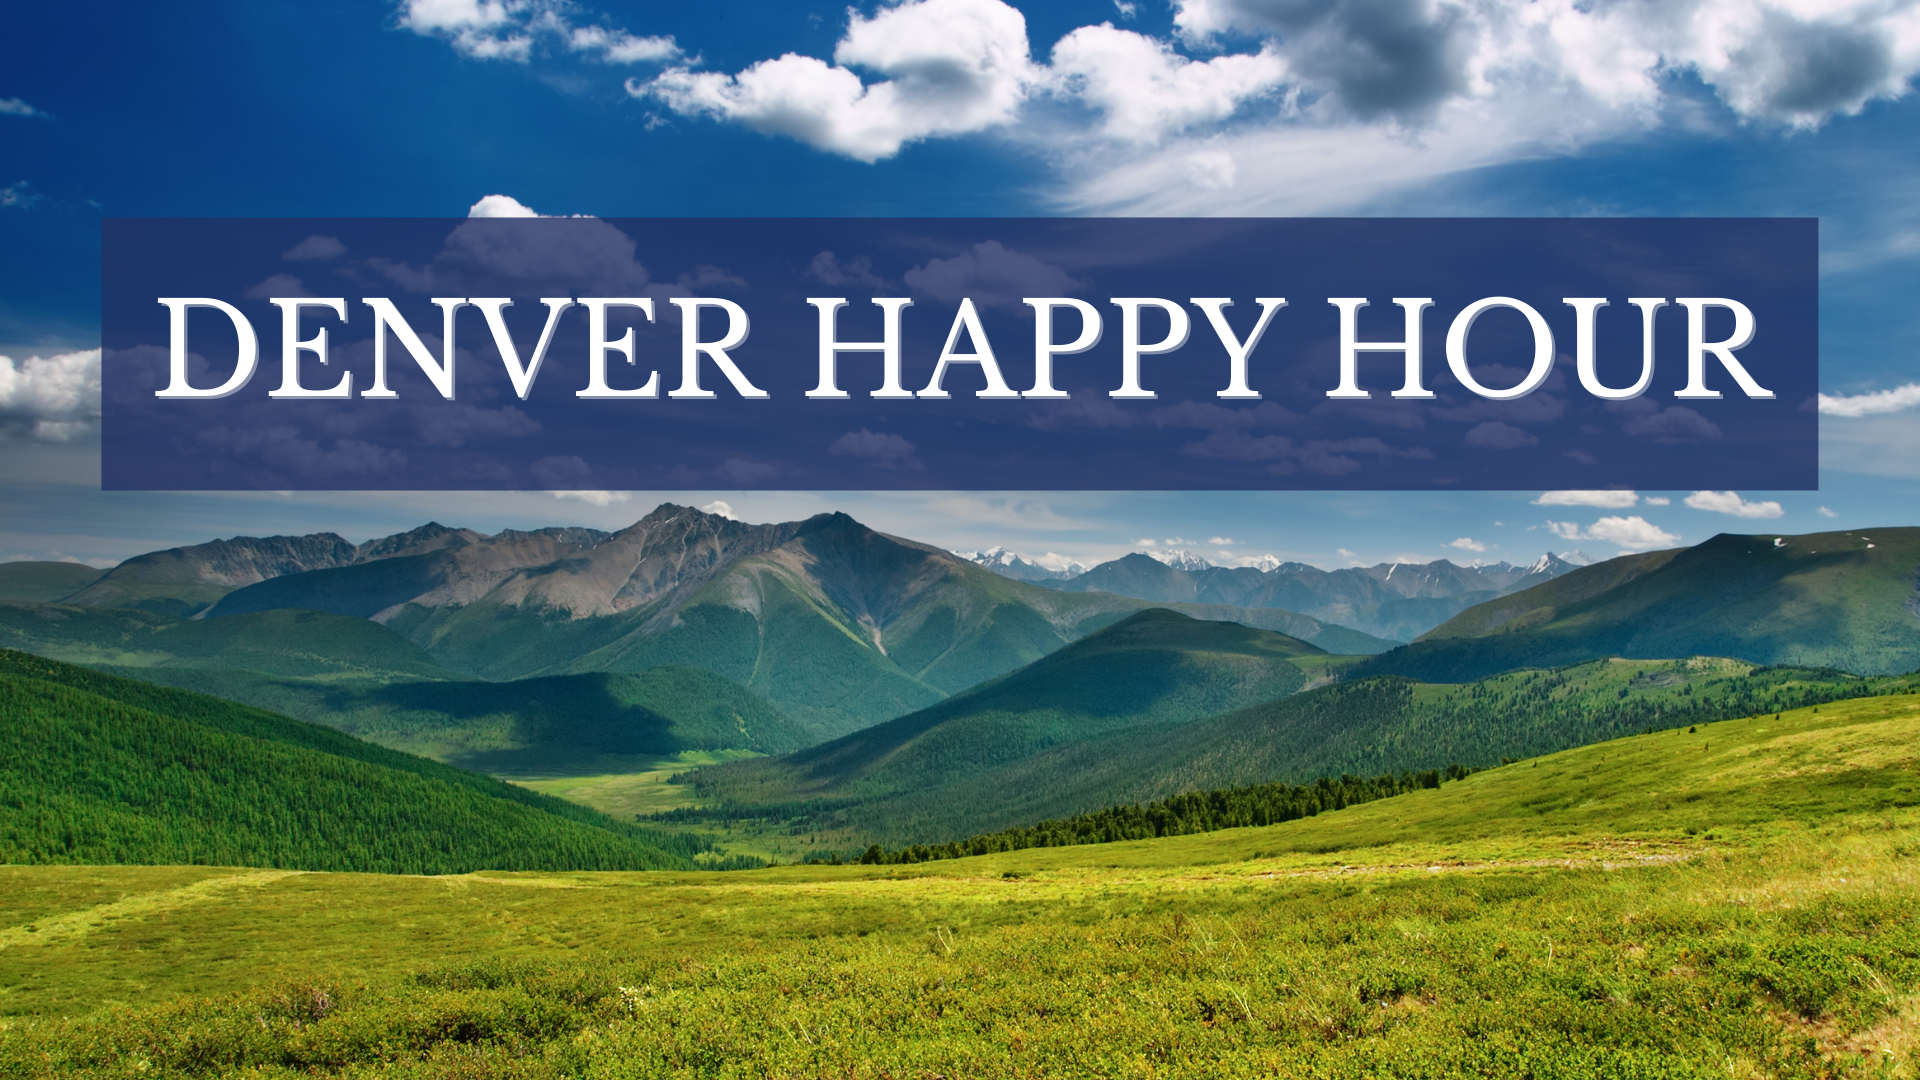 image for Denver Happy Hour